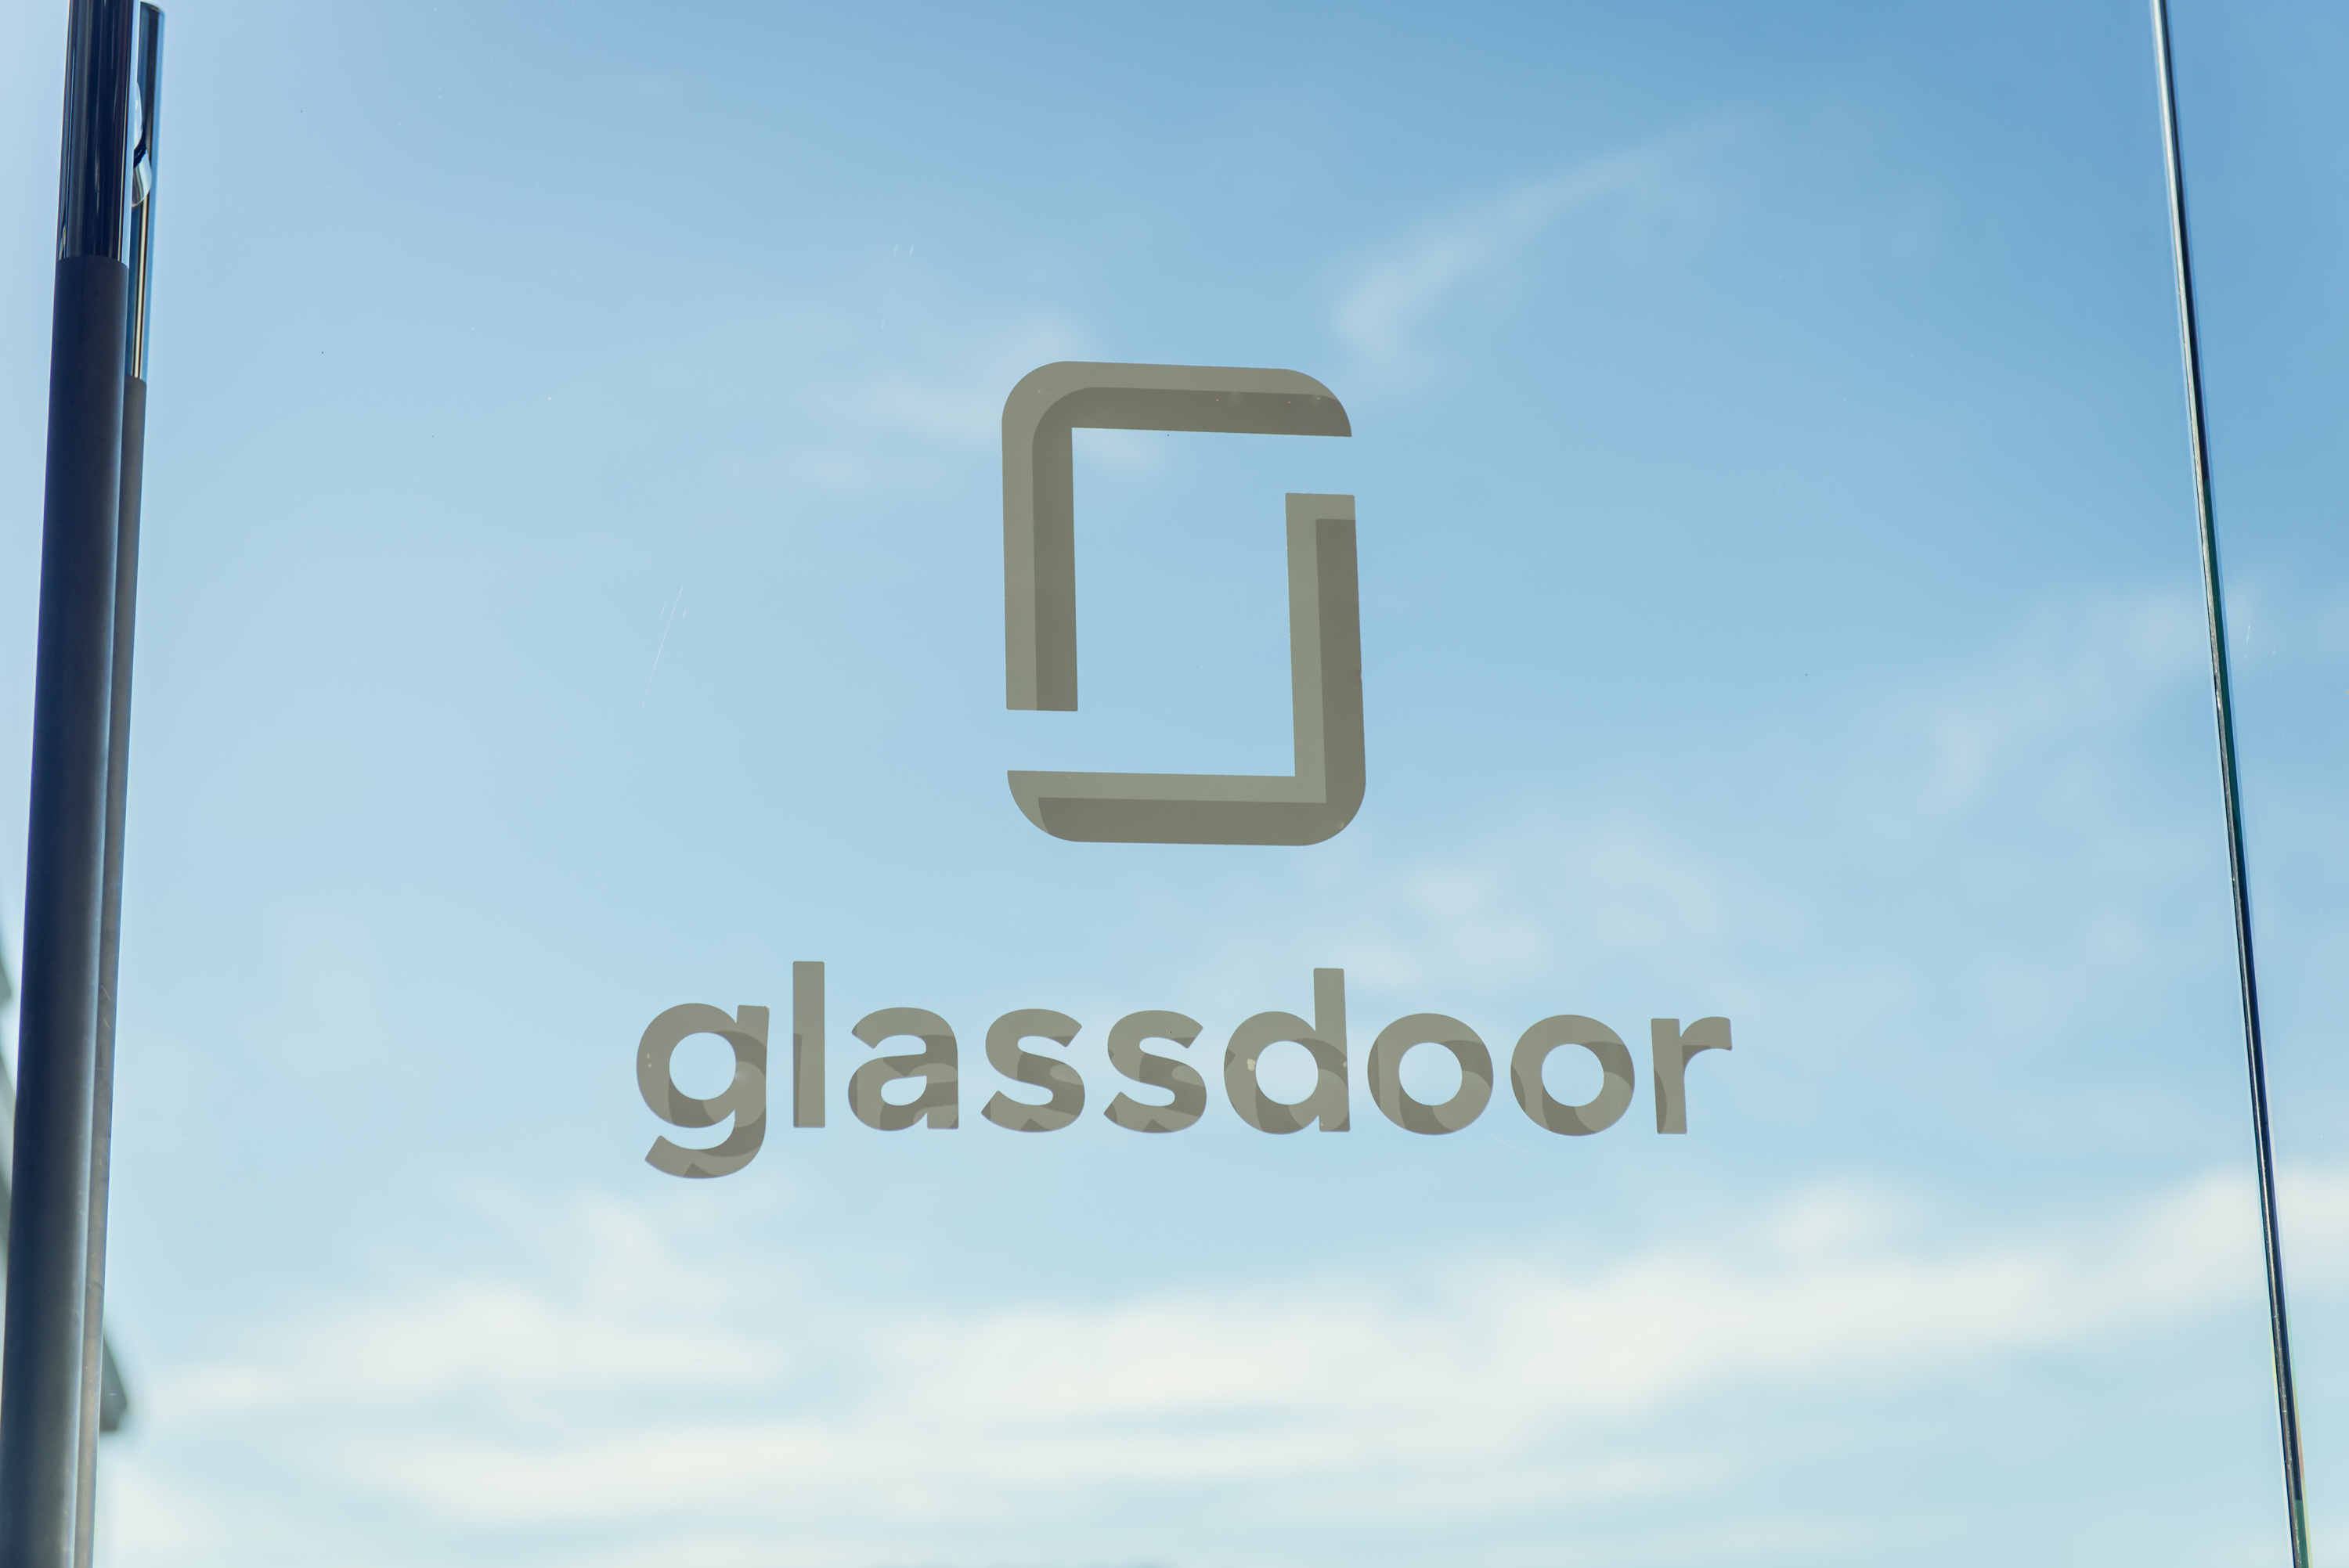 17_5-2_Glassdoor_Huddle_0007-1.jpg